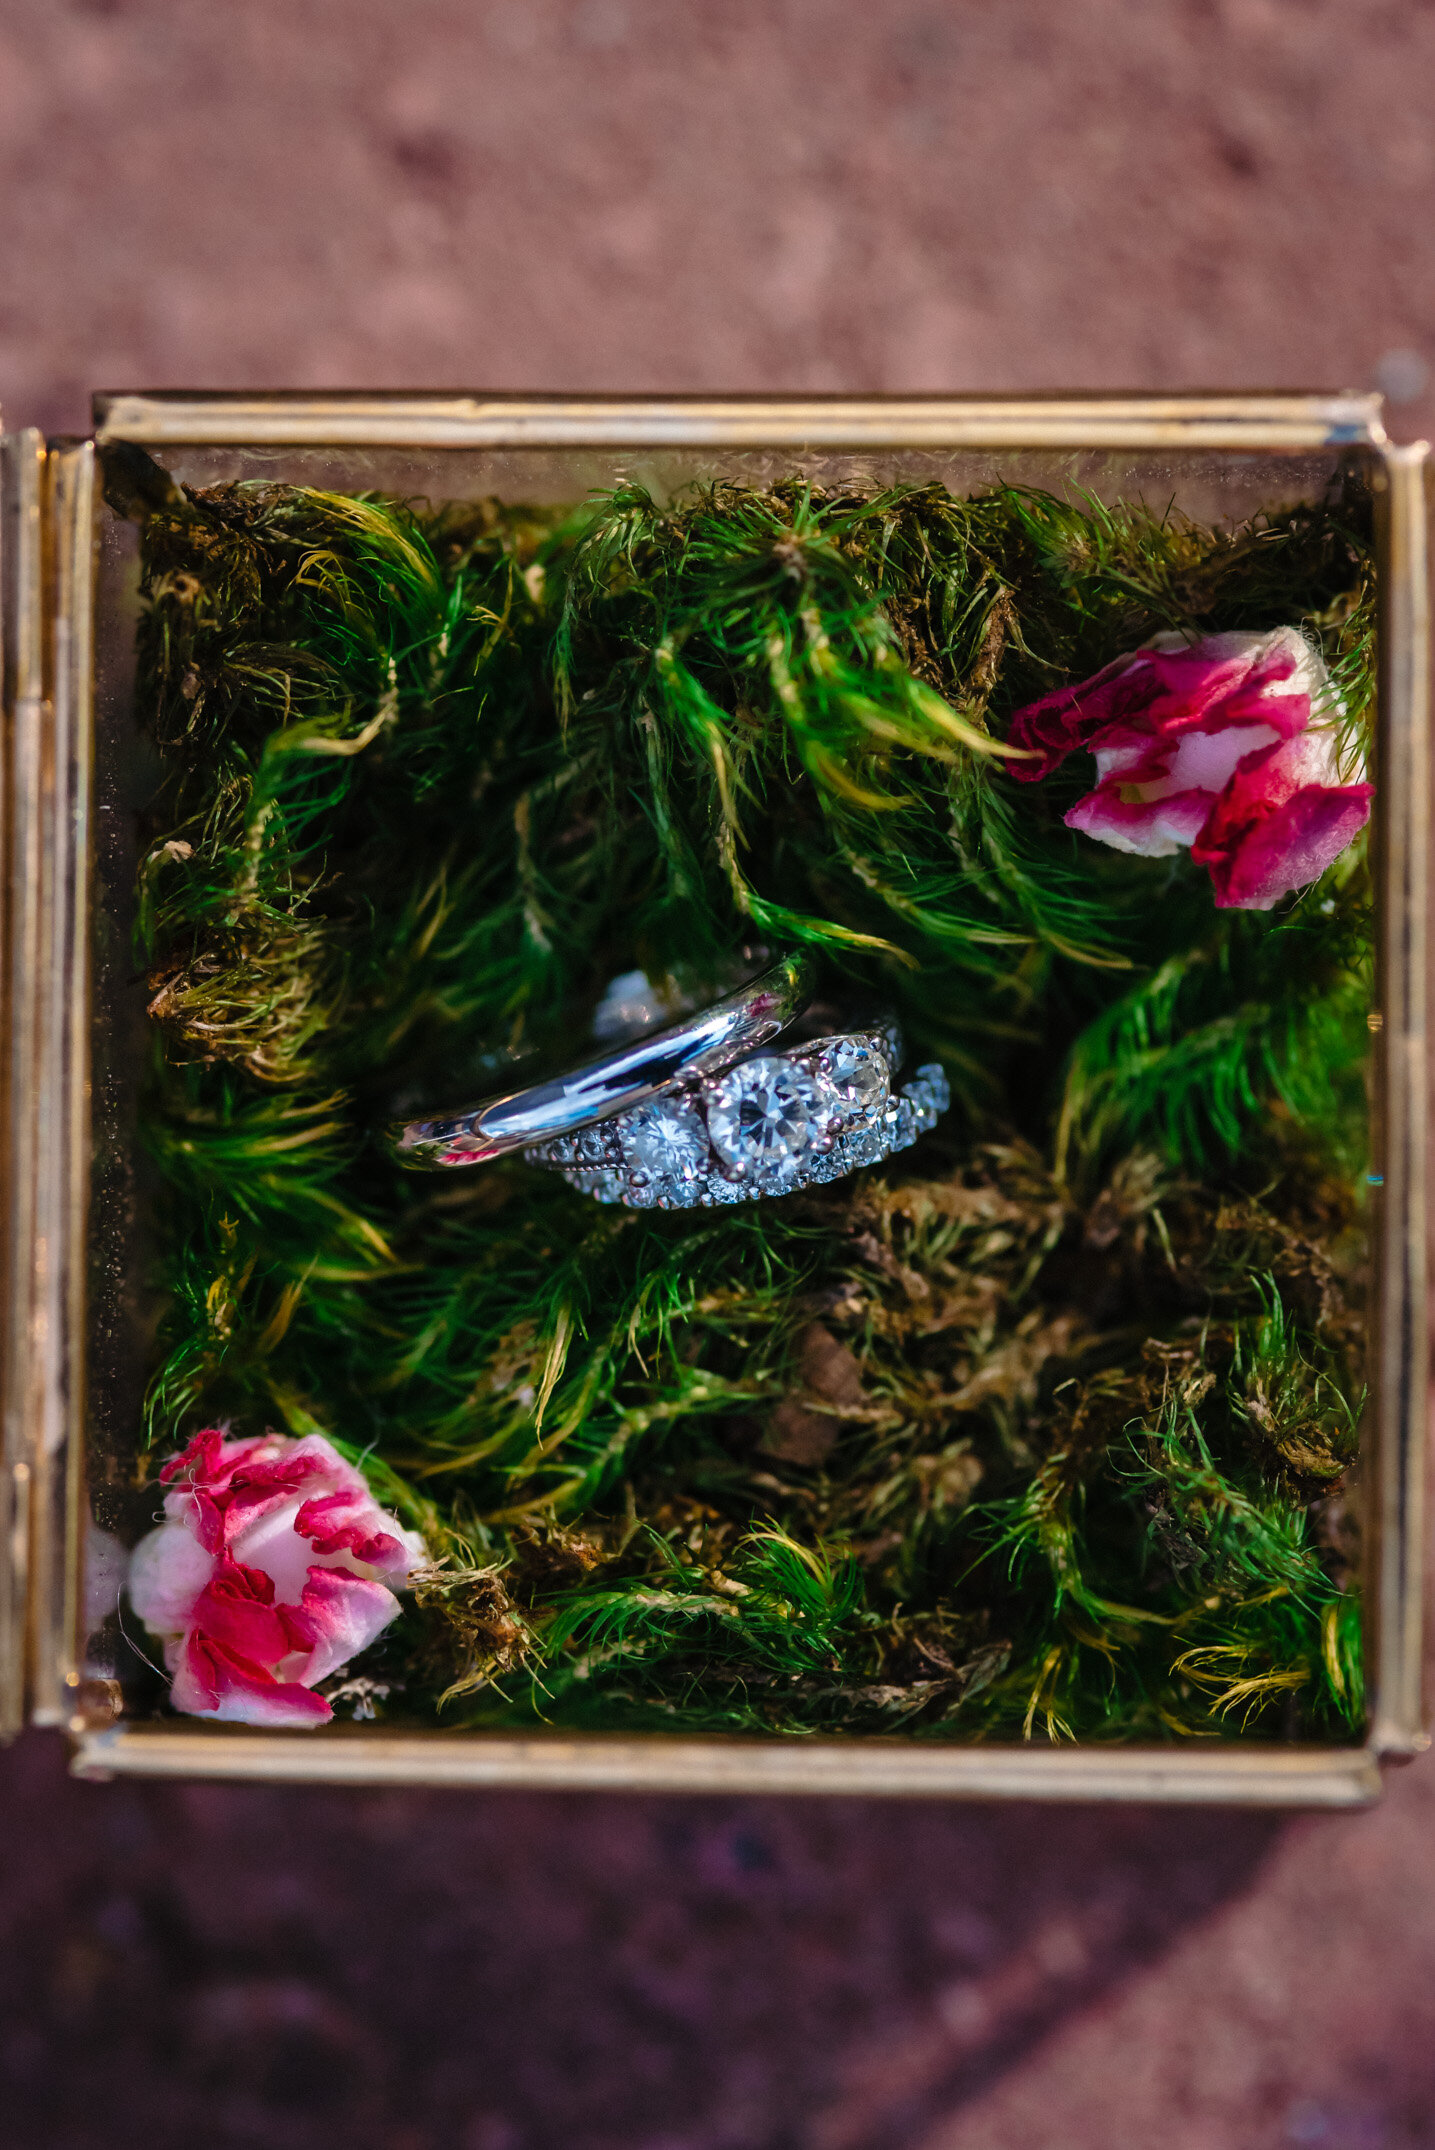 Weddings rings in moss filled box